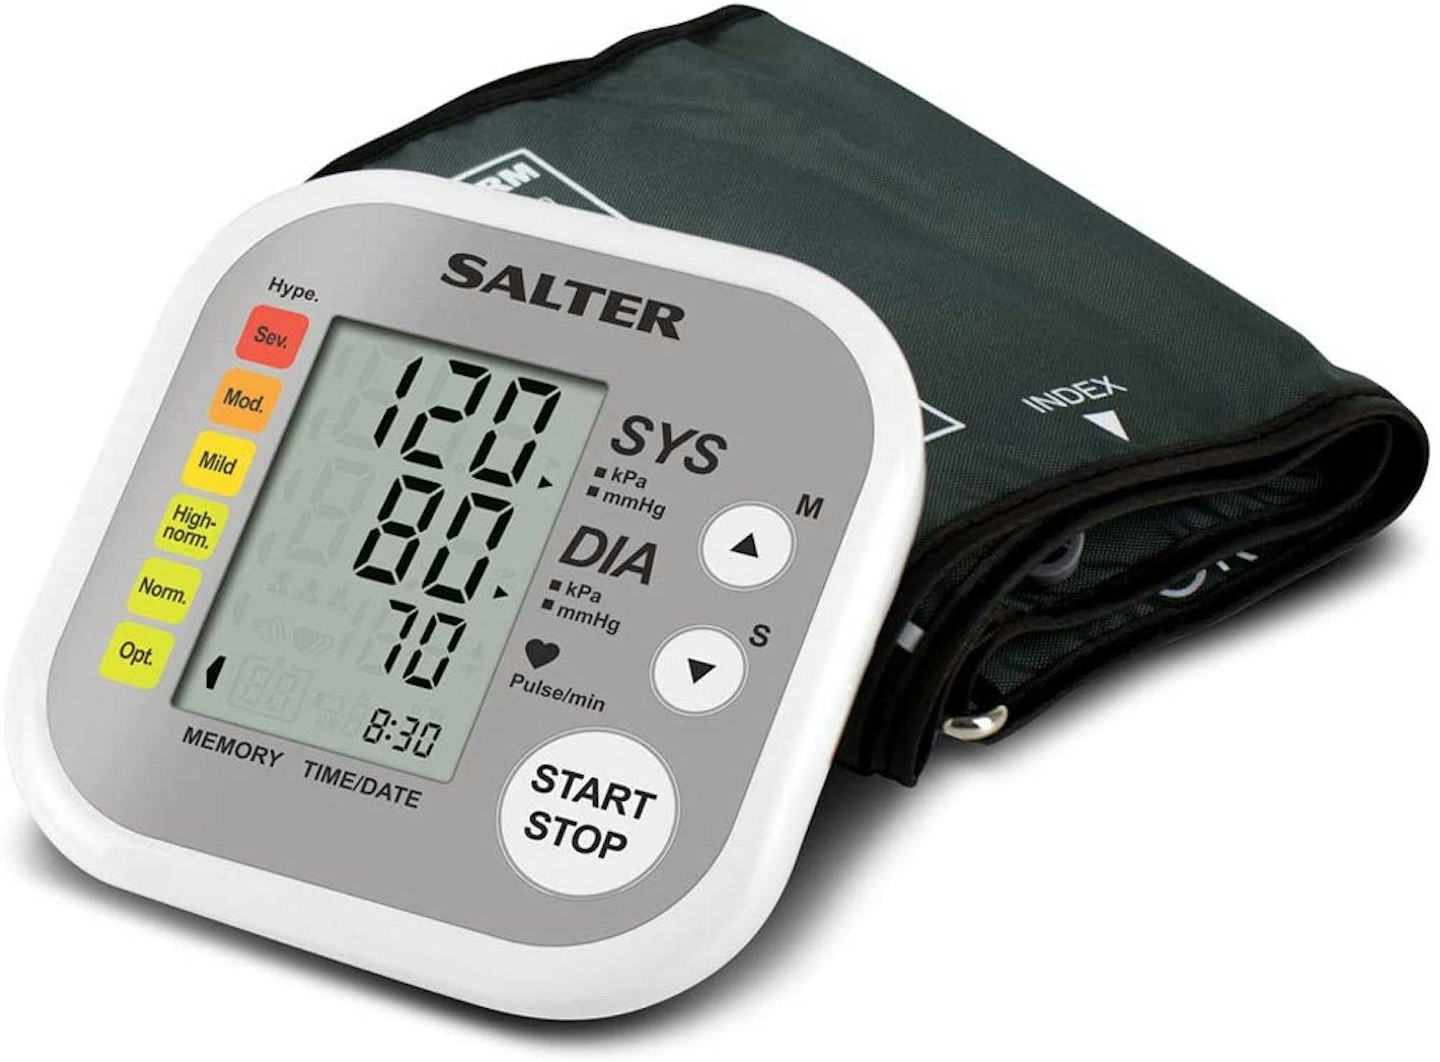 Beurer BM 58 Touchscreen Blood Pressure Monitor for sale online